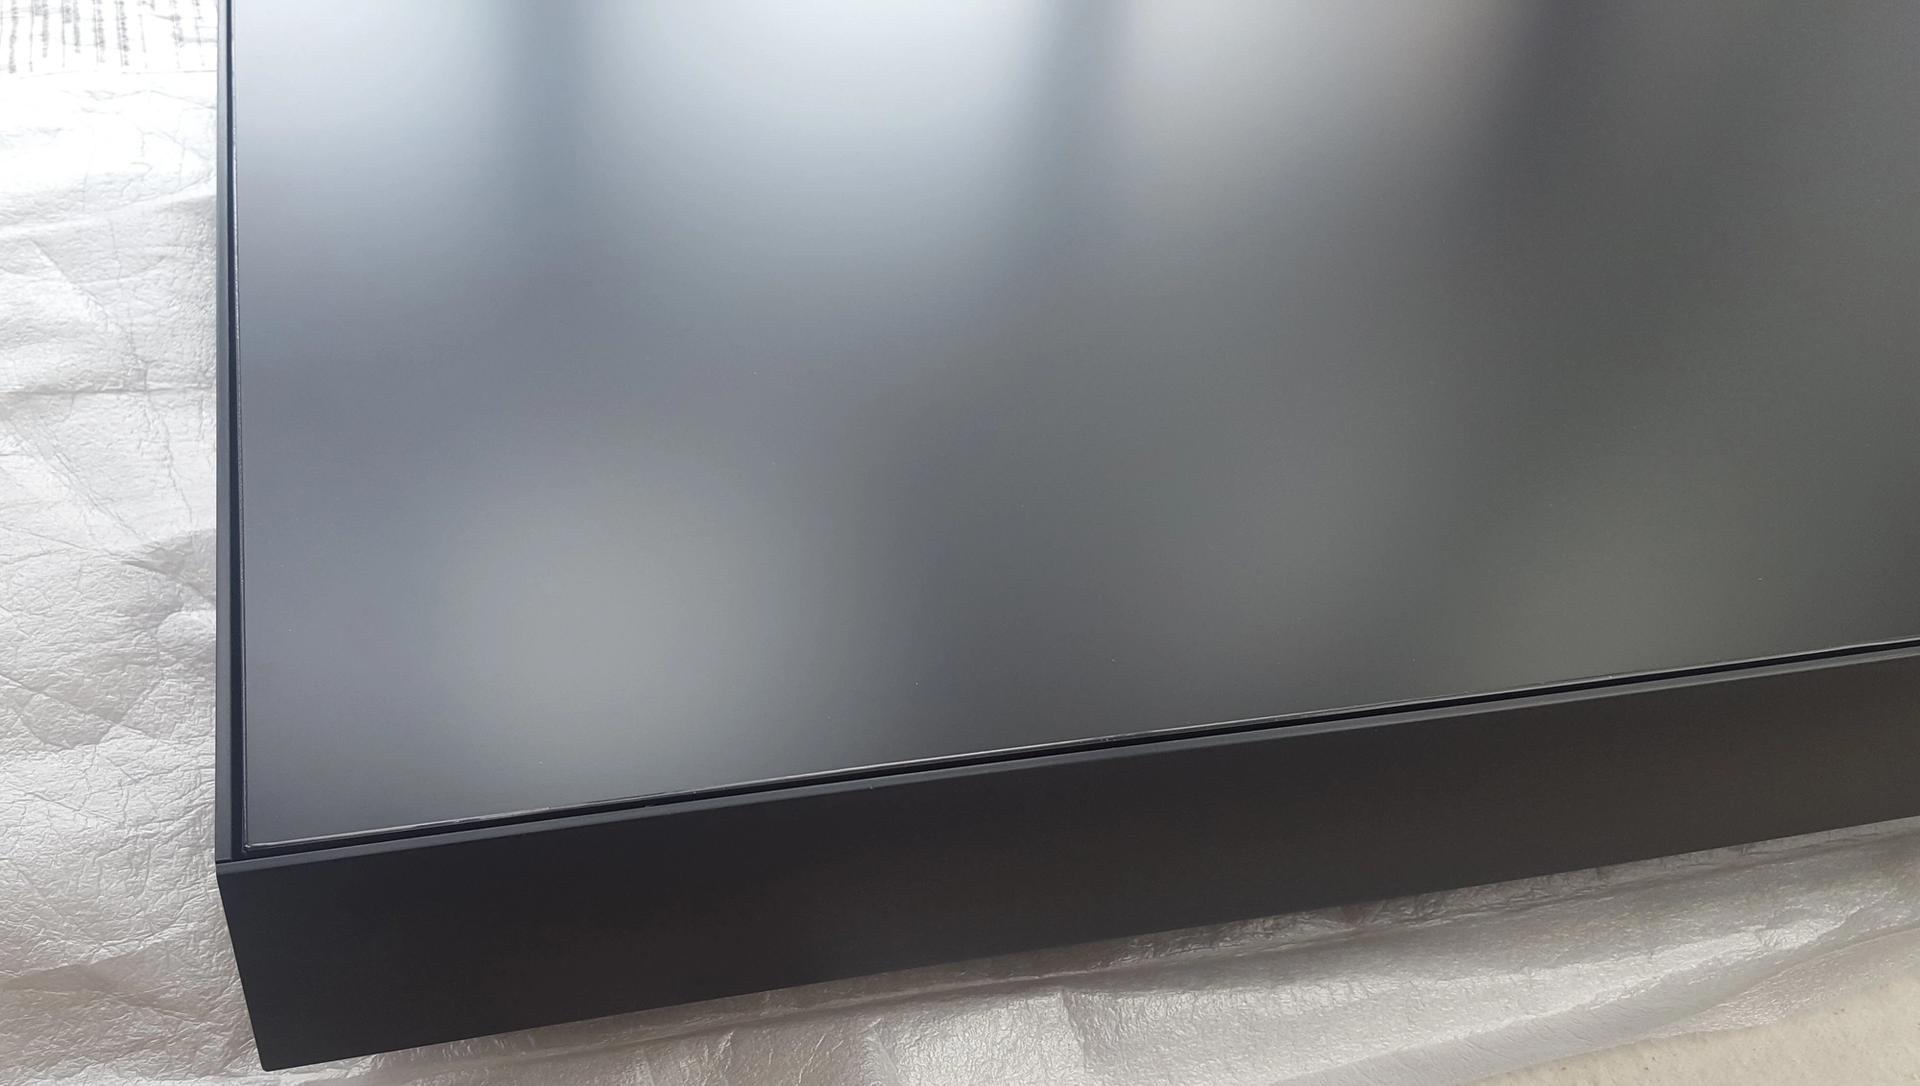 Detail image of corner of bespoke LED screen in black anodised box frame